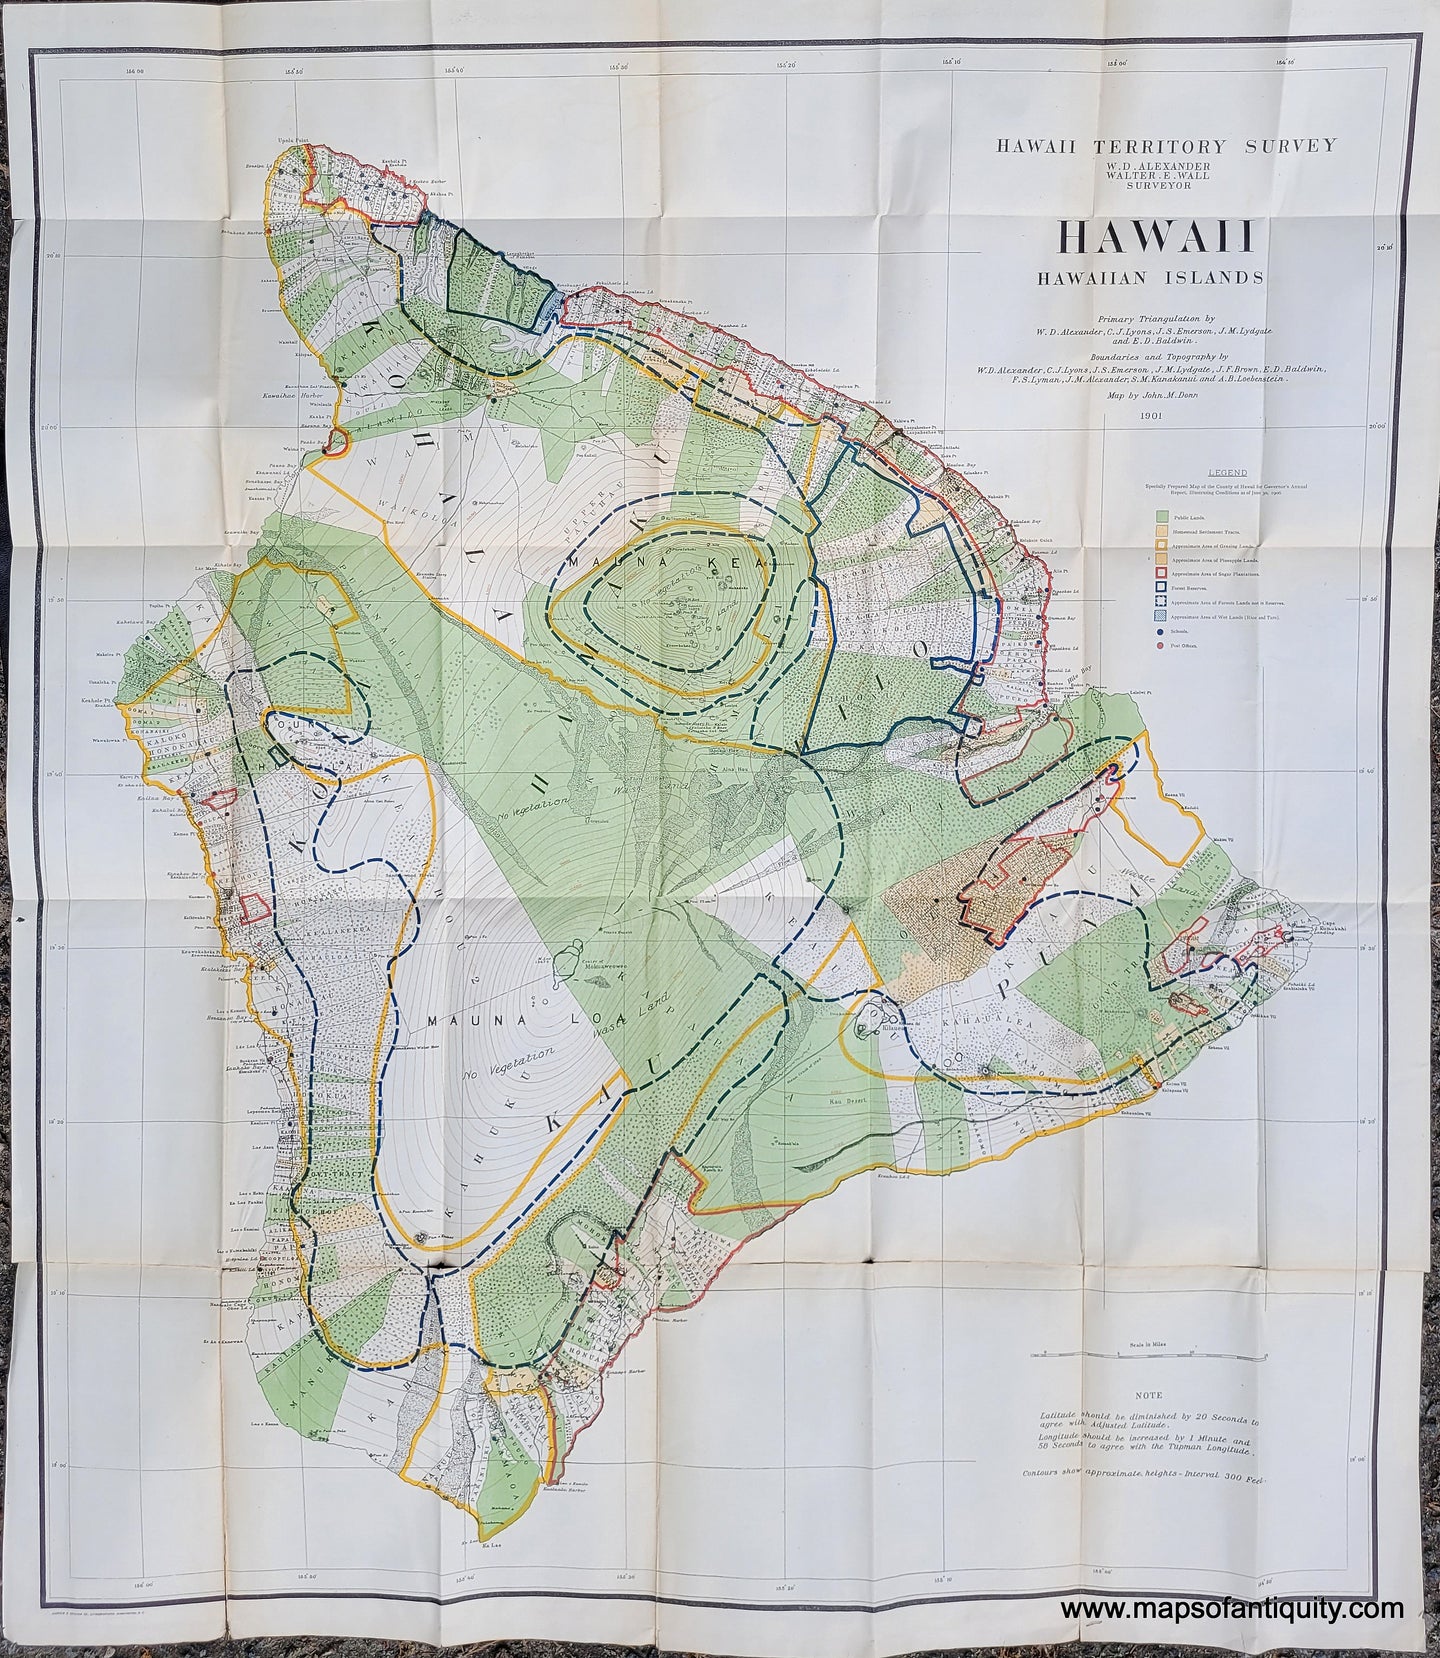 Genuine-Antique-Map-Hawaii-Hawaiian-Islands-1901-Hawaii-Territory-Survey-Maps-Of-Antiquity